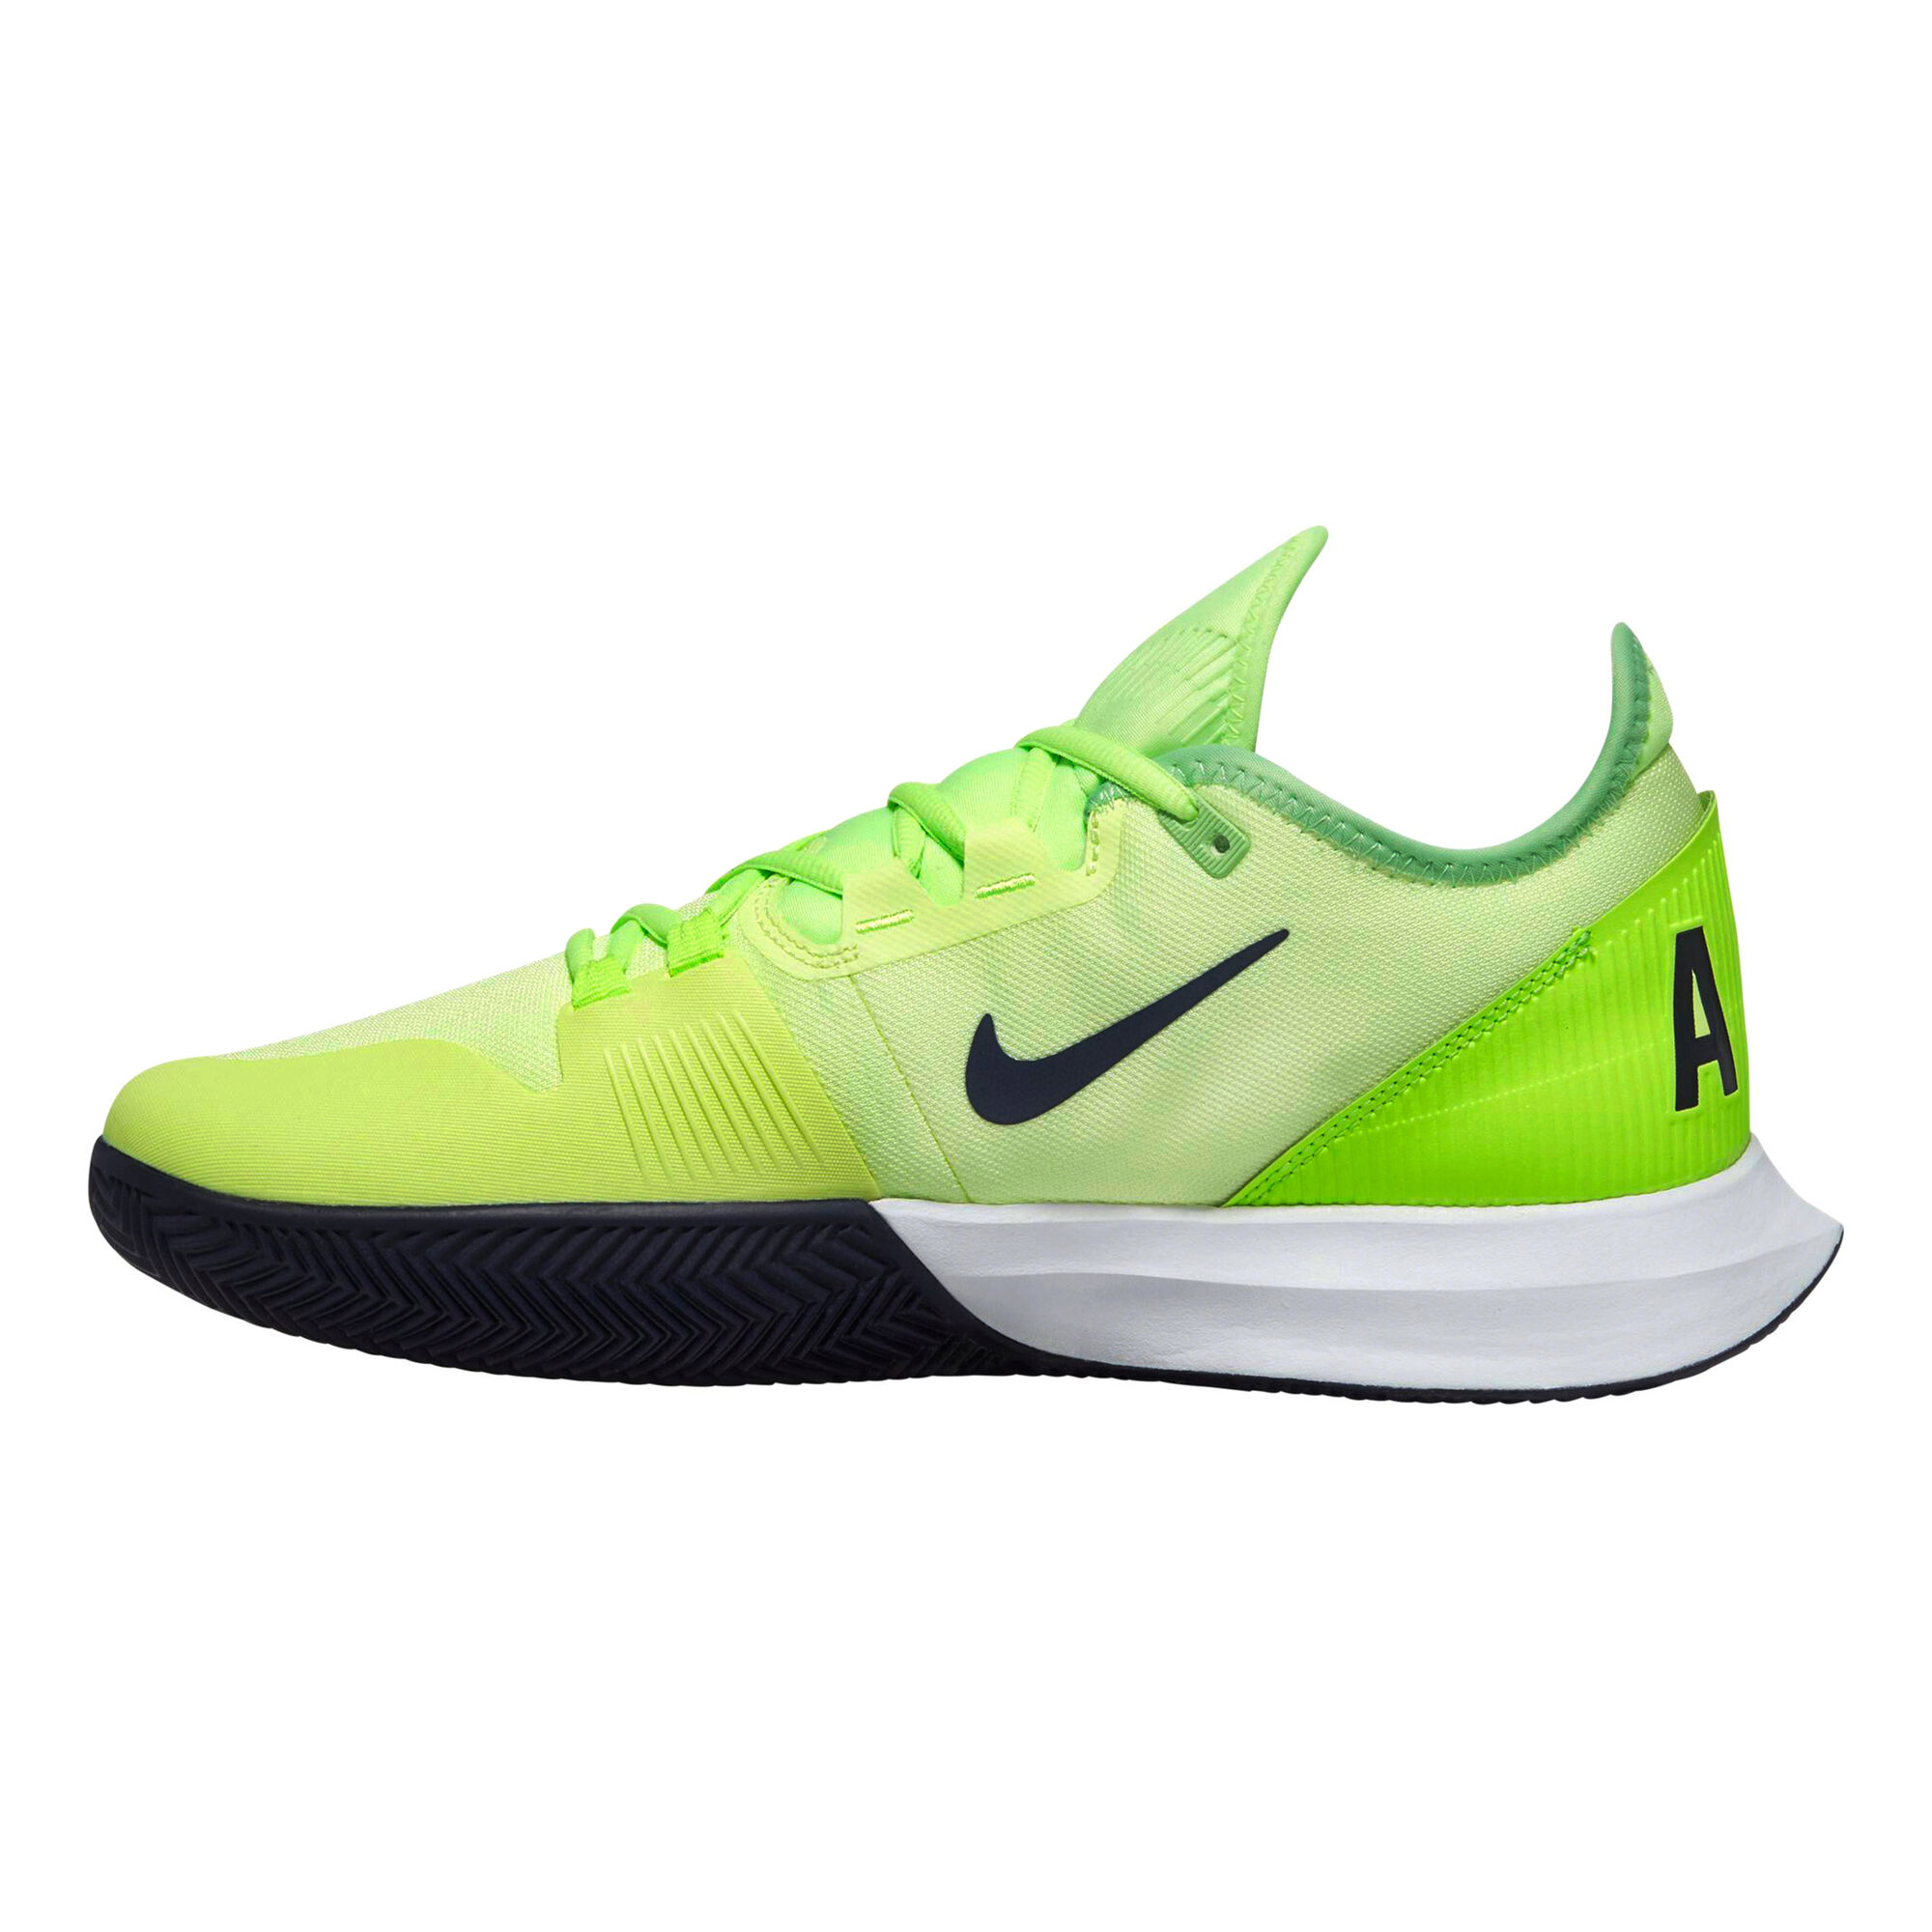 Nike Air Max Clay Shoe - Light Green, Neon Green online | Tennis-Point